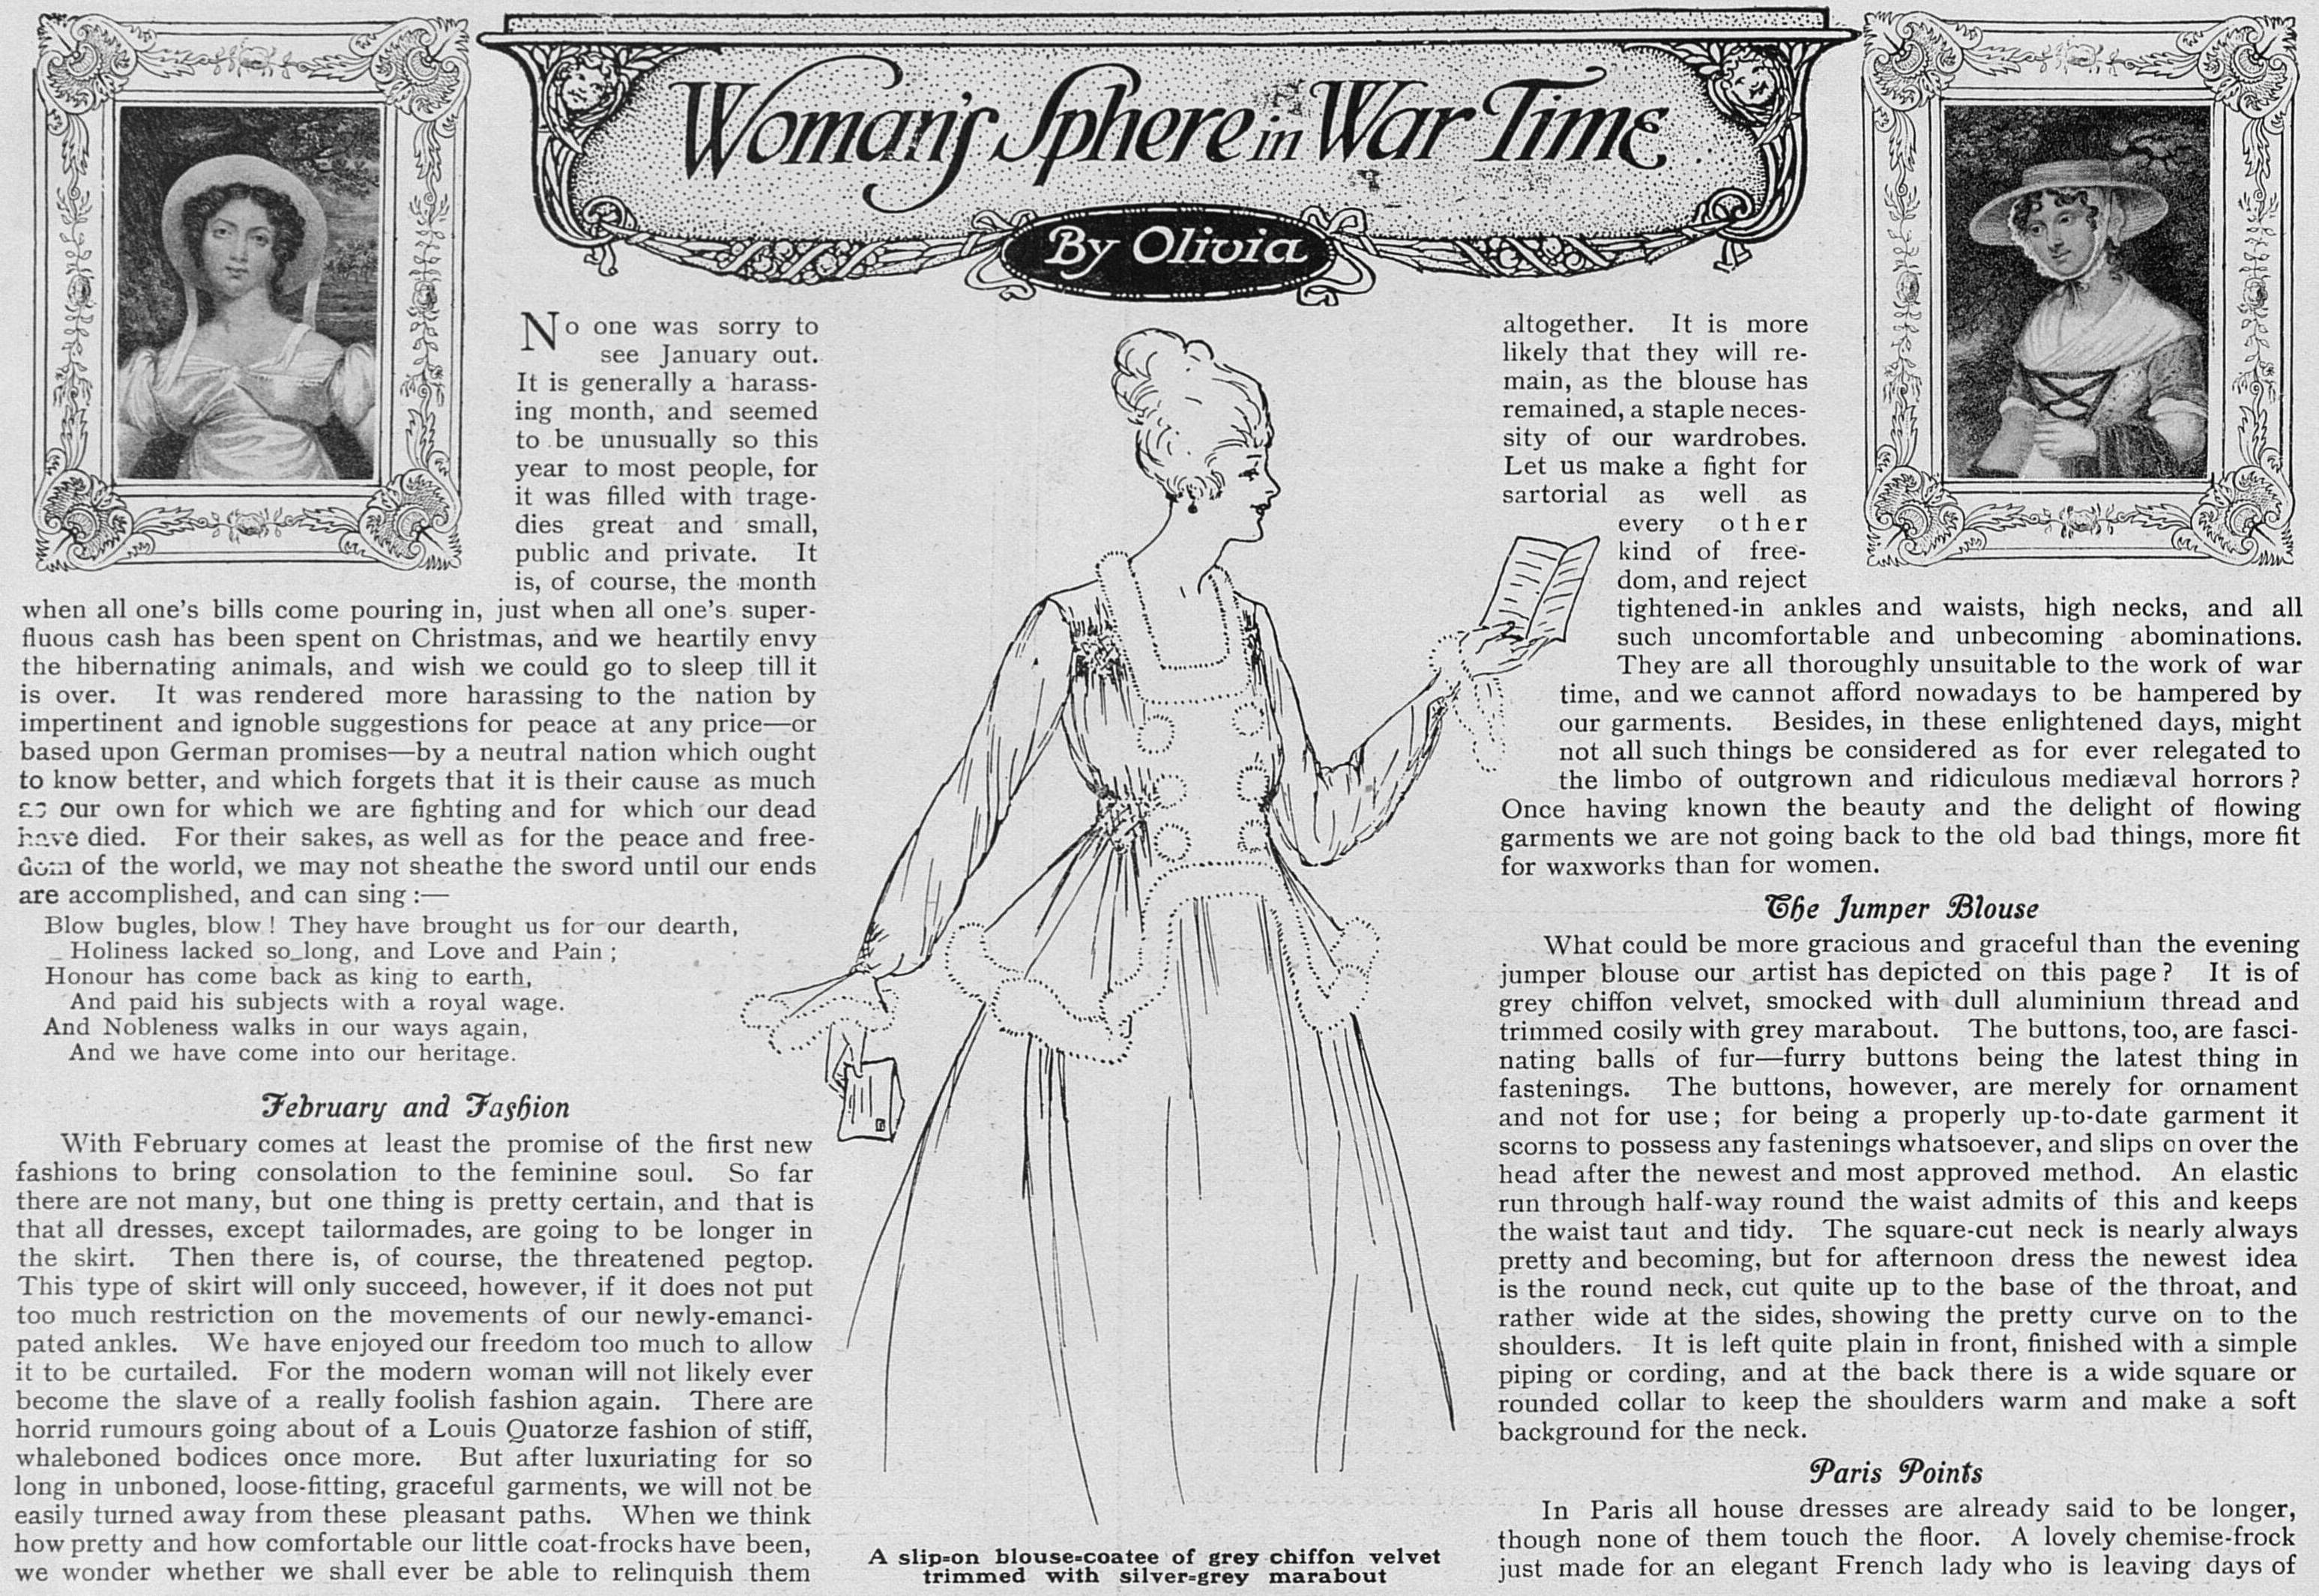 WomansSphereInWarTime_3Feb1917